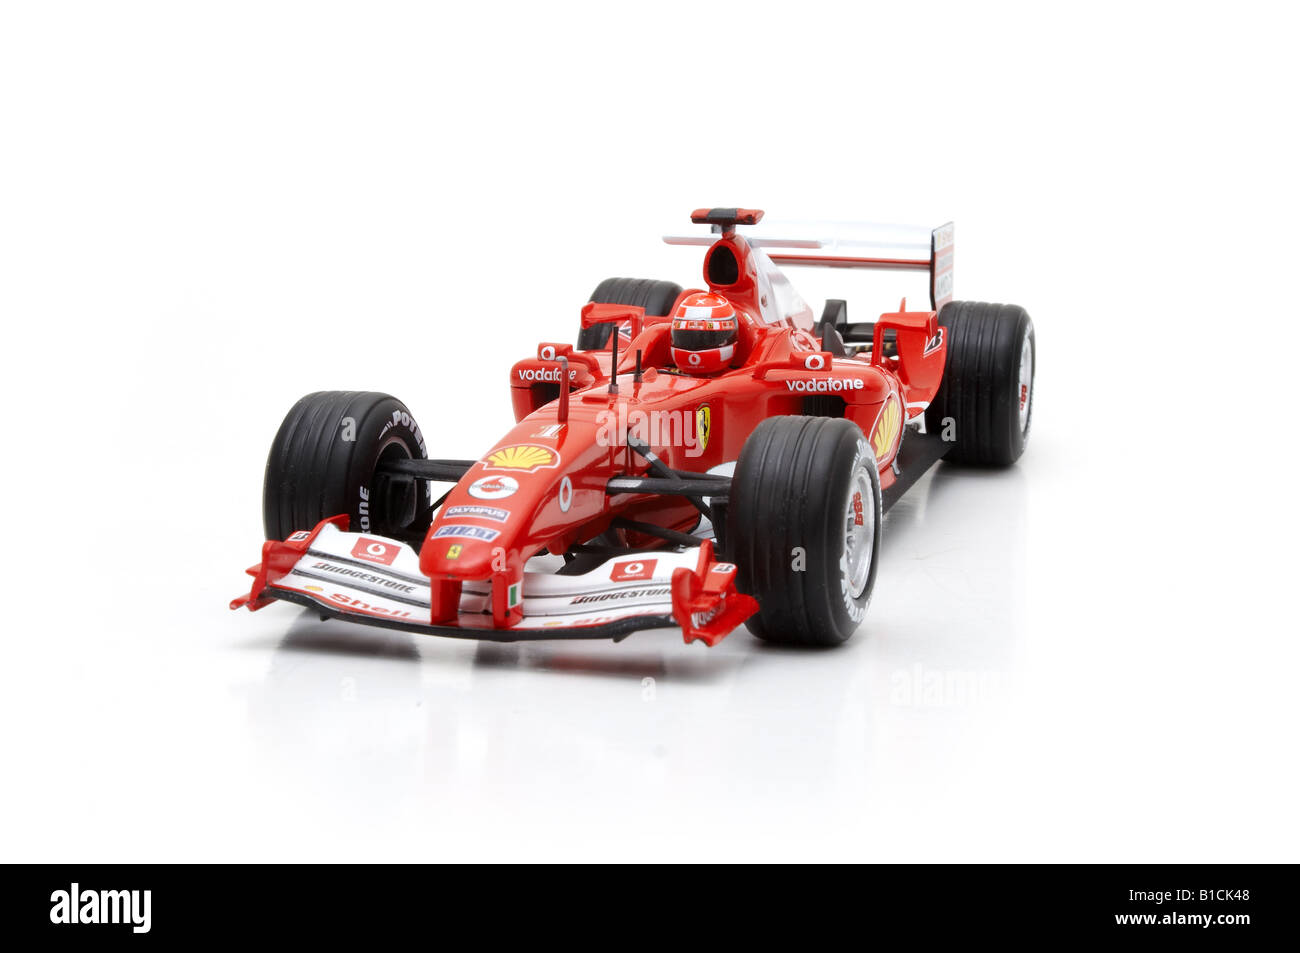 Ferrari-Formel-1-Rennwagen. Stockfoto